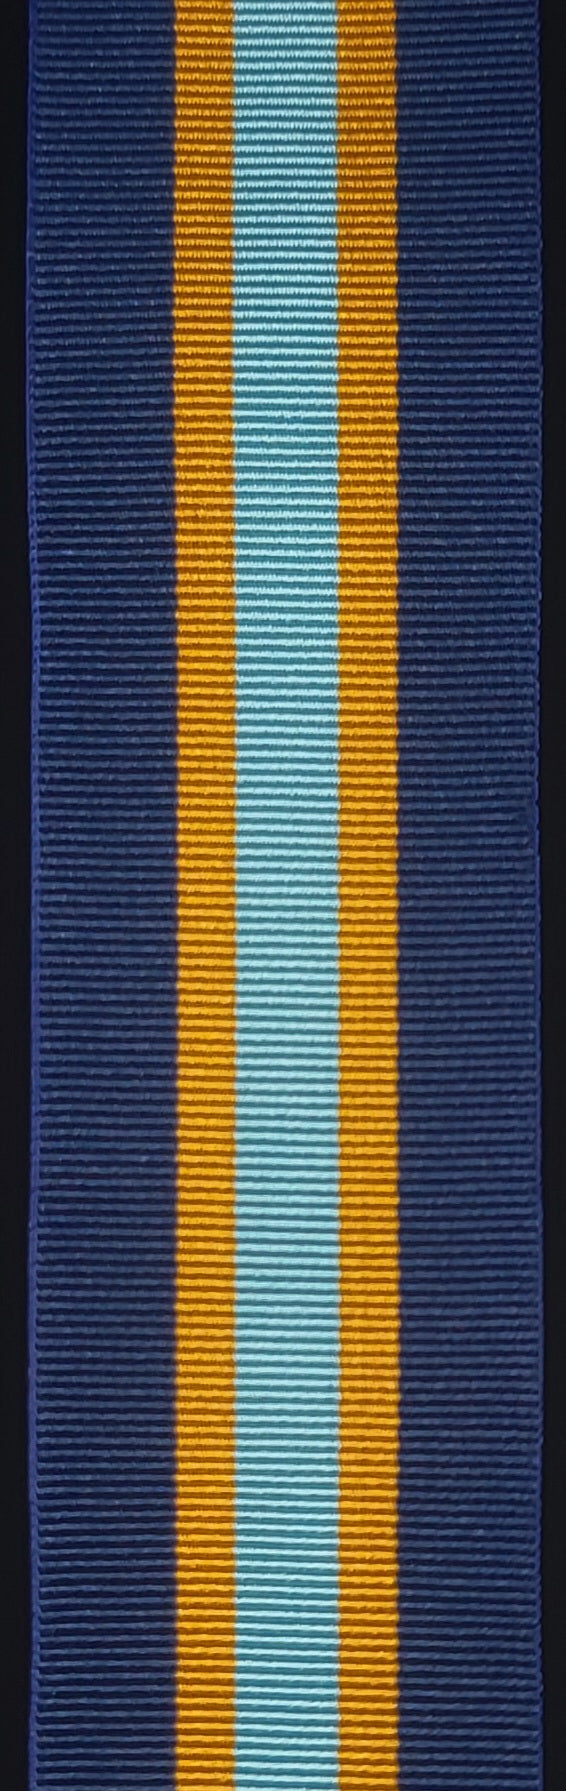 Ribbon, Canadian Cadet Airforce Long Serice Medal